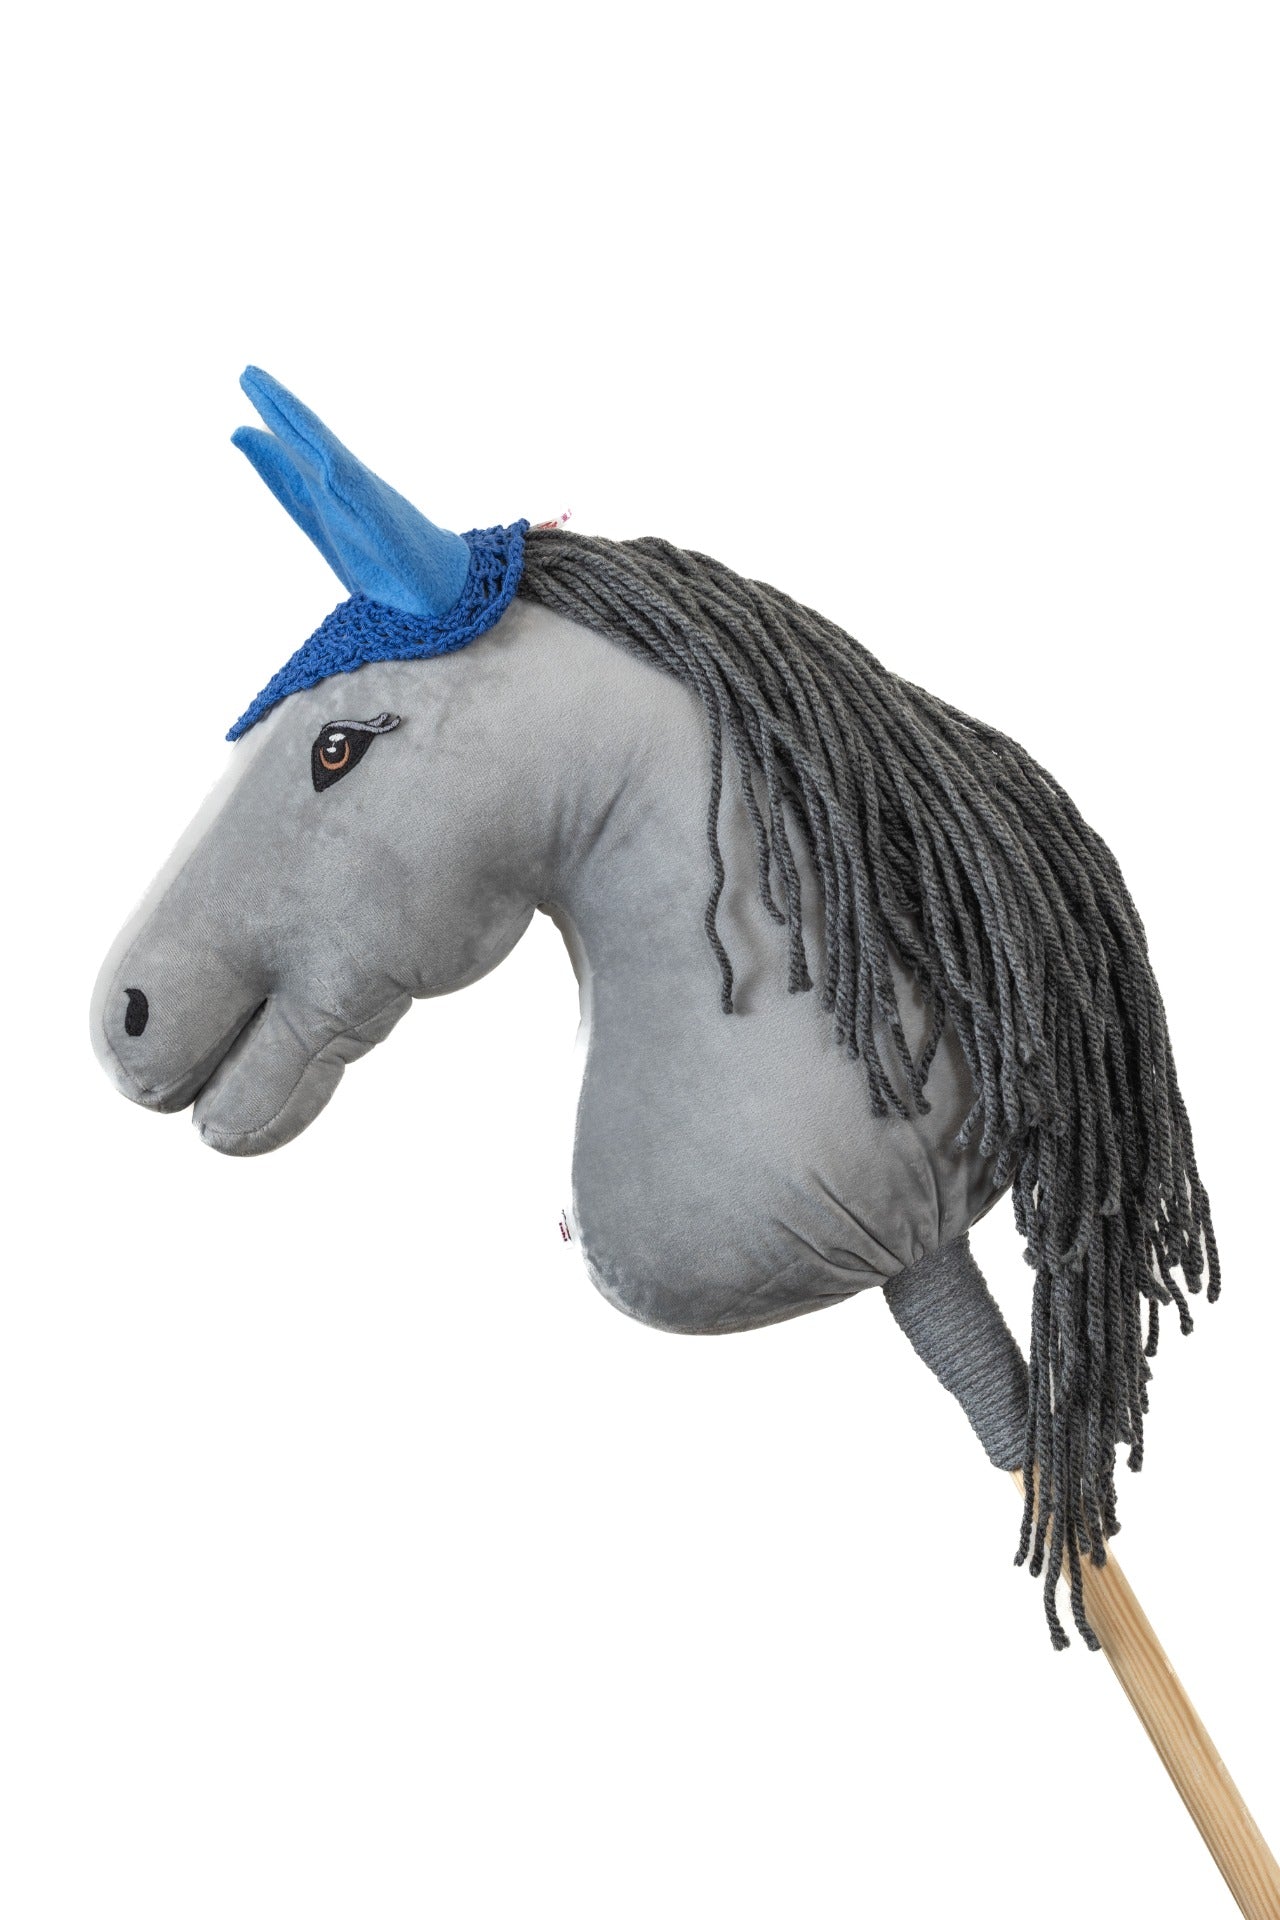 Ear net crocheted - Dark blue with blue ears - Adult horse